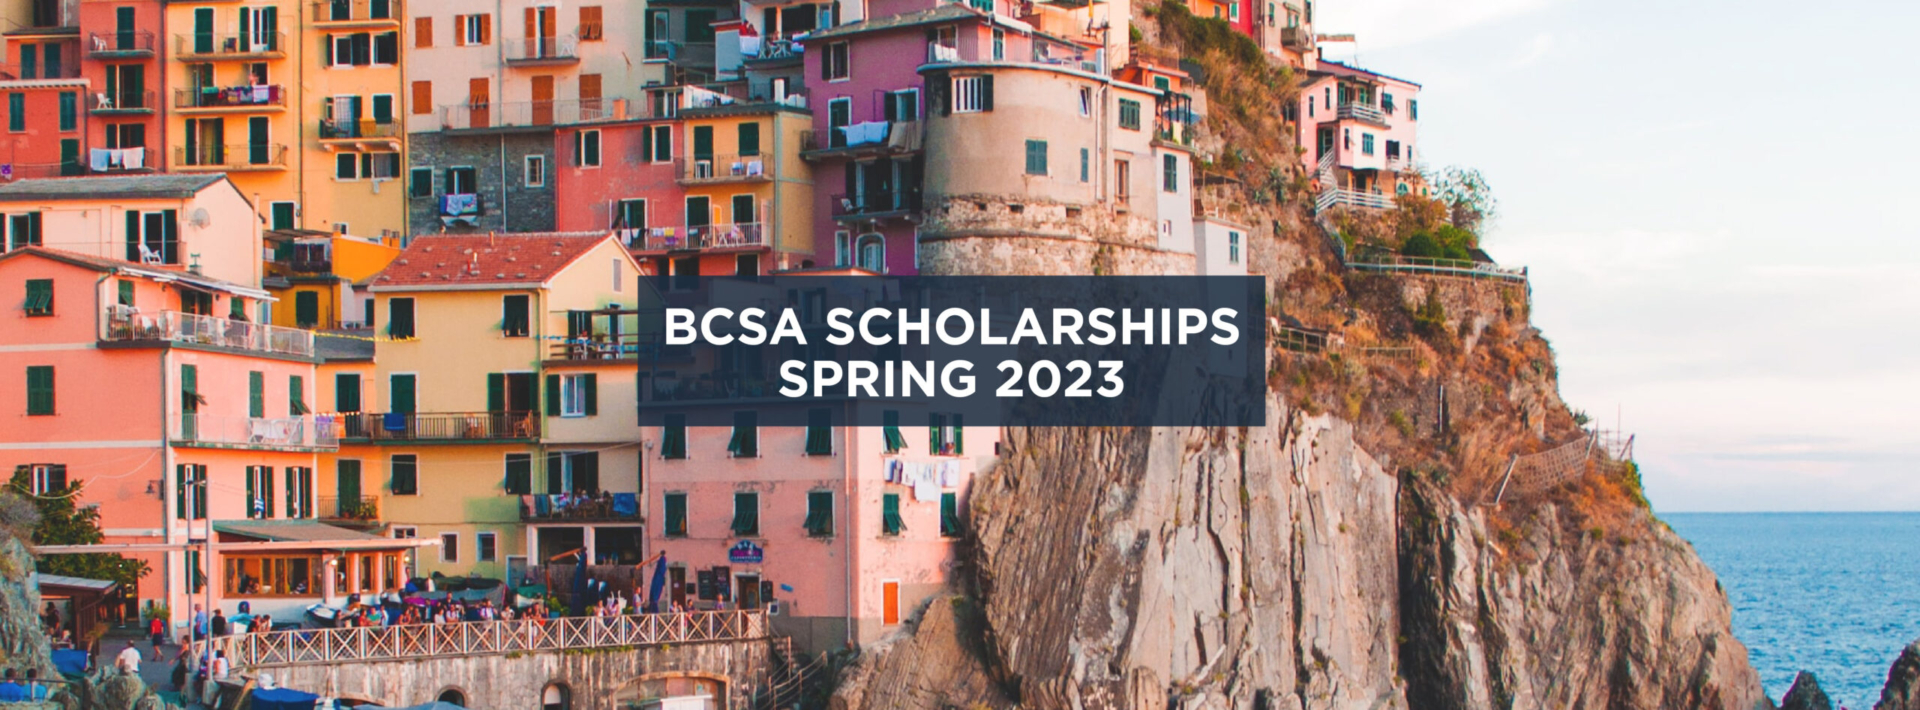 BCSA Scholarships Spring 2023